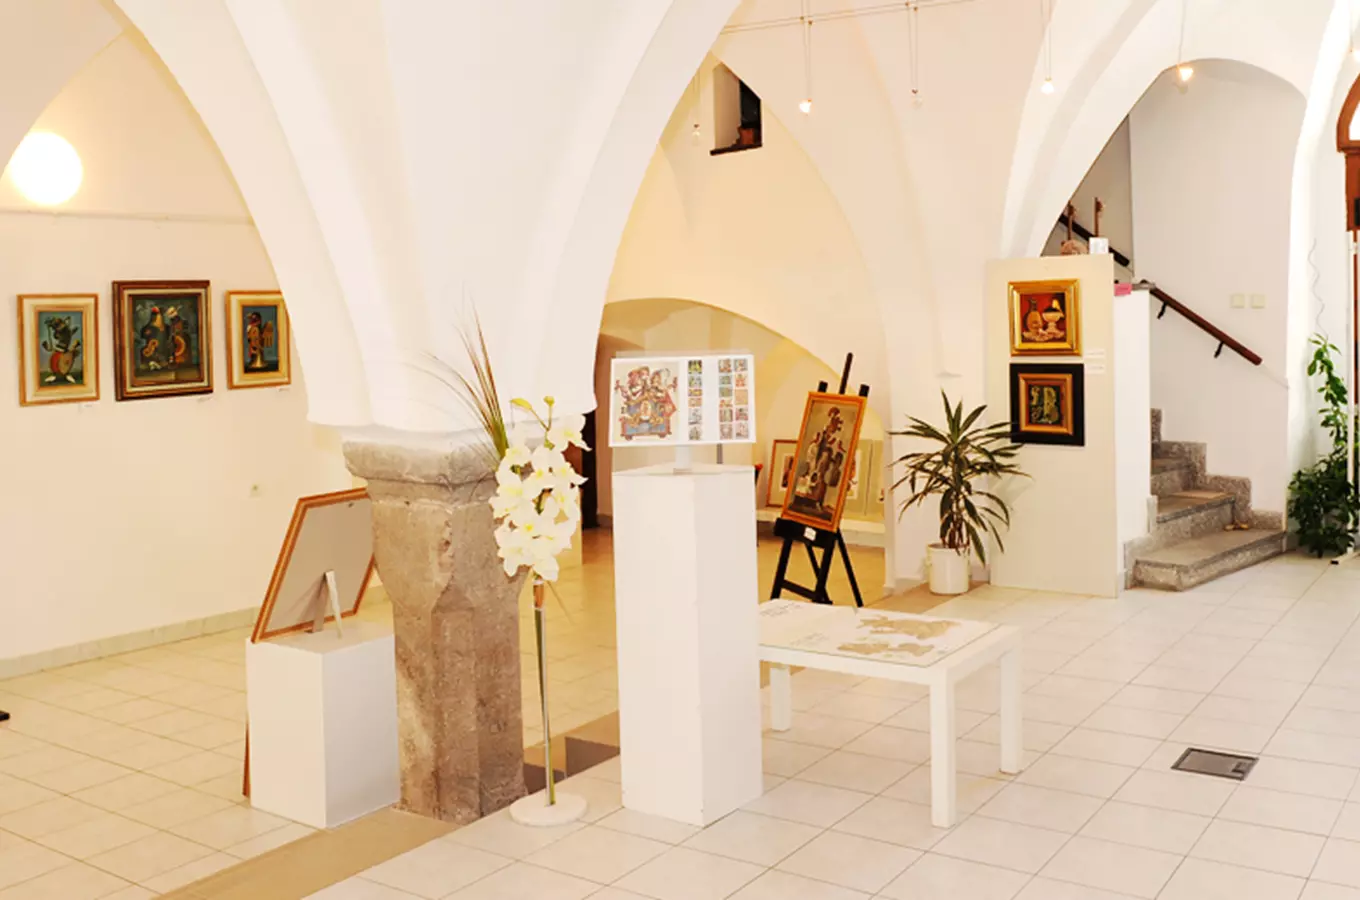 Galerie 140 v Táboře